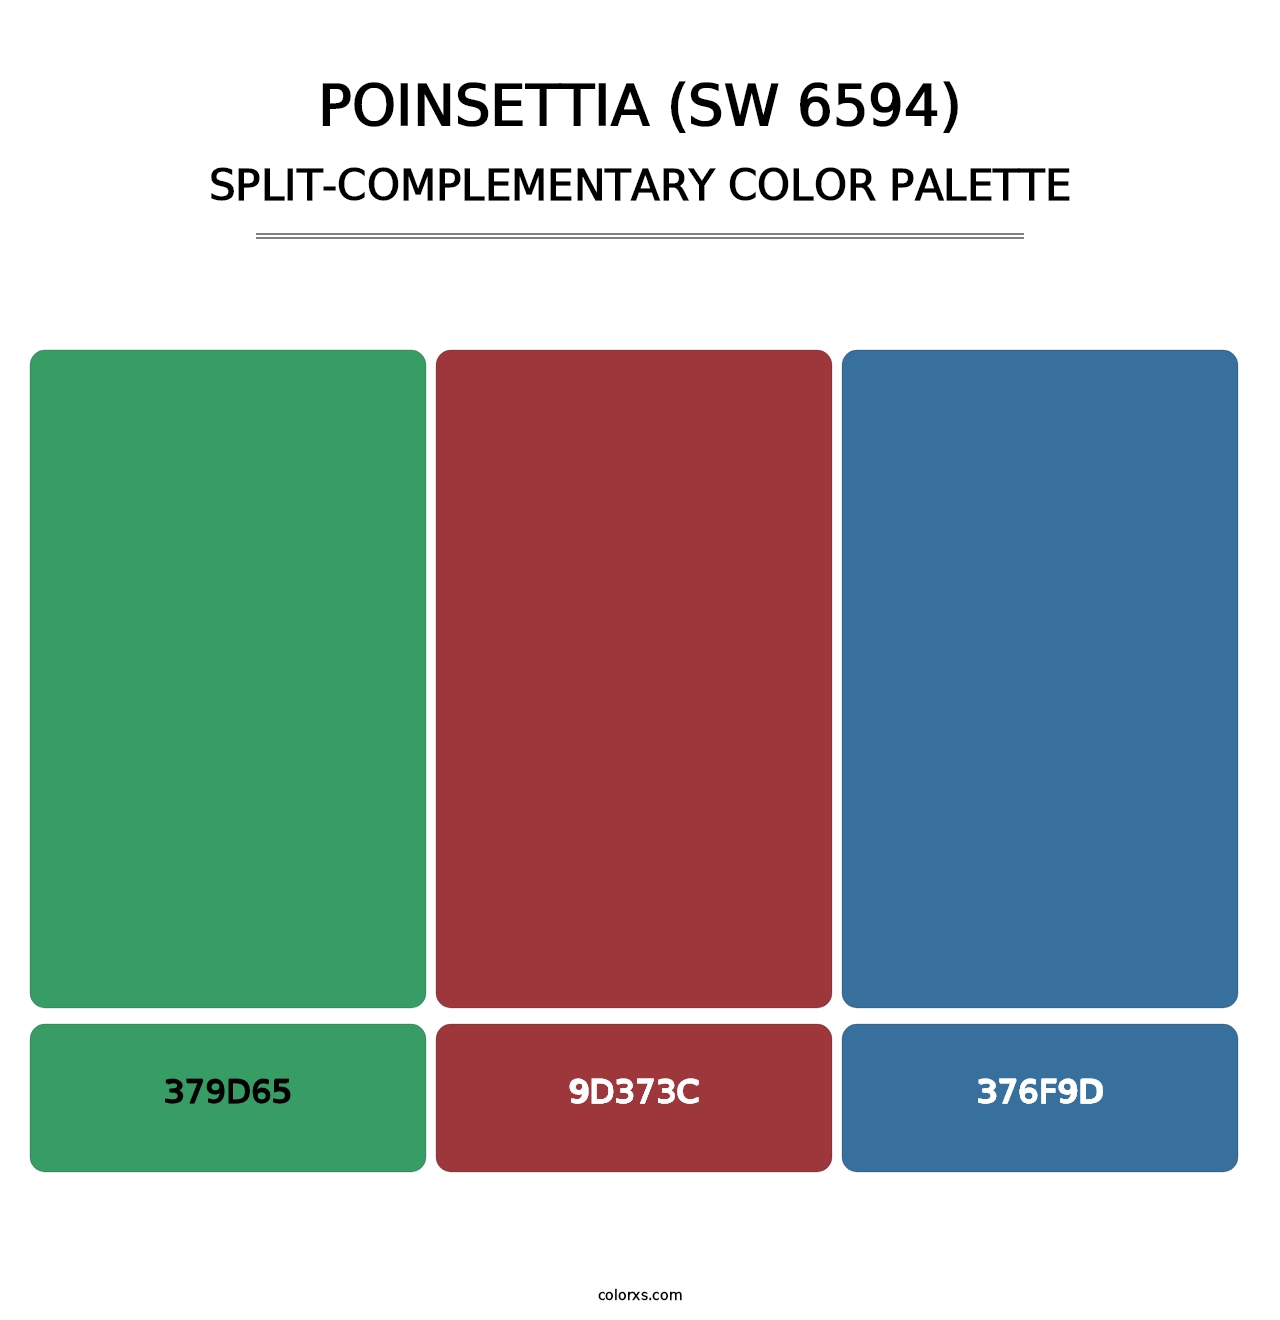 Poinsettia (SW 6594) - Split-Complementary Color Palette